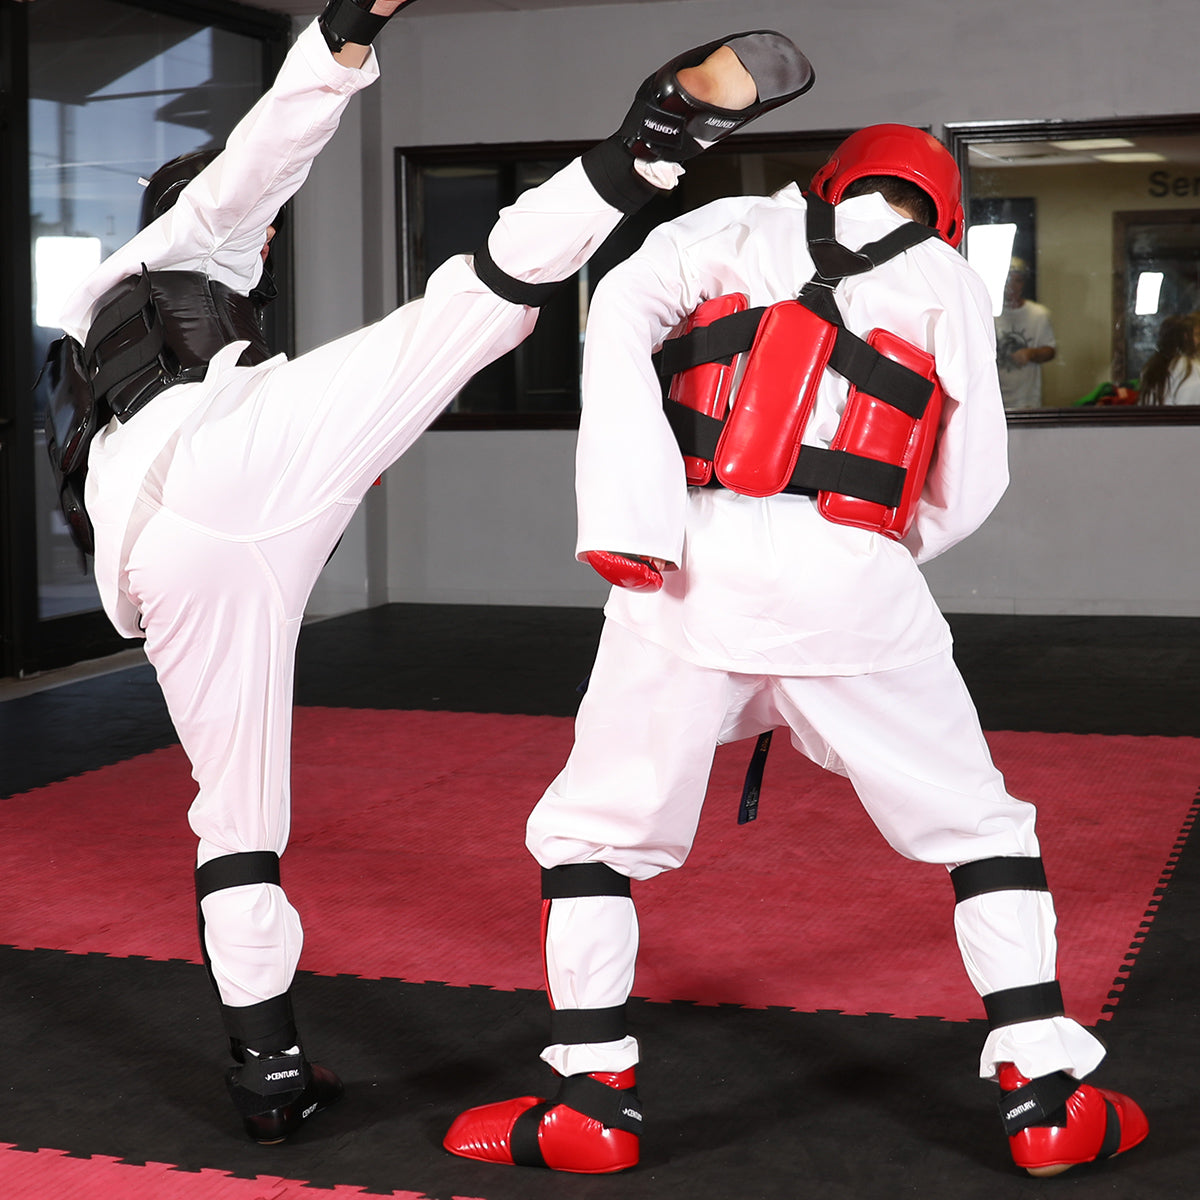 Kize Sparring Kicks, Century Martial Arts Canada